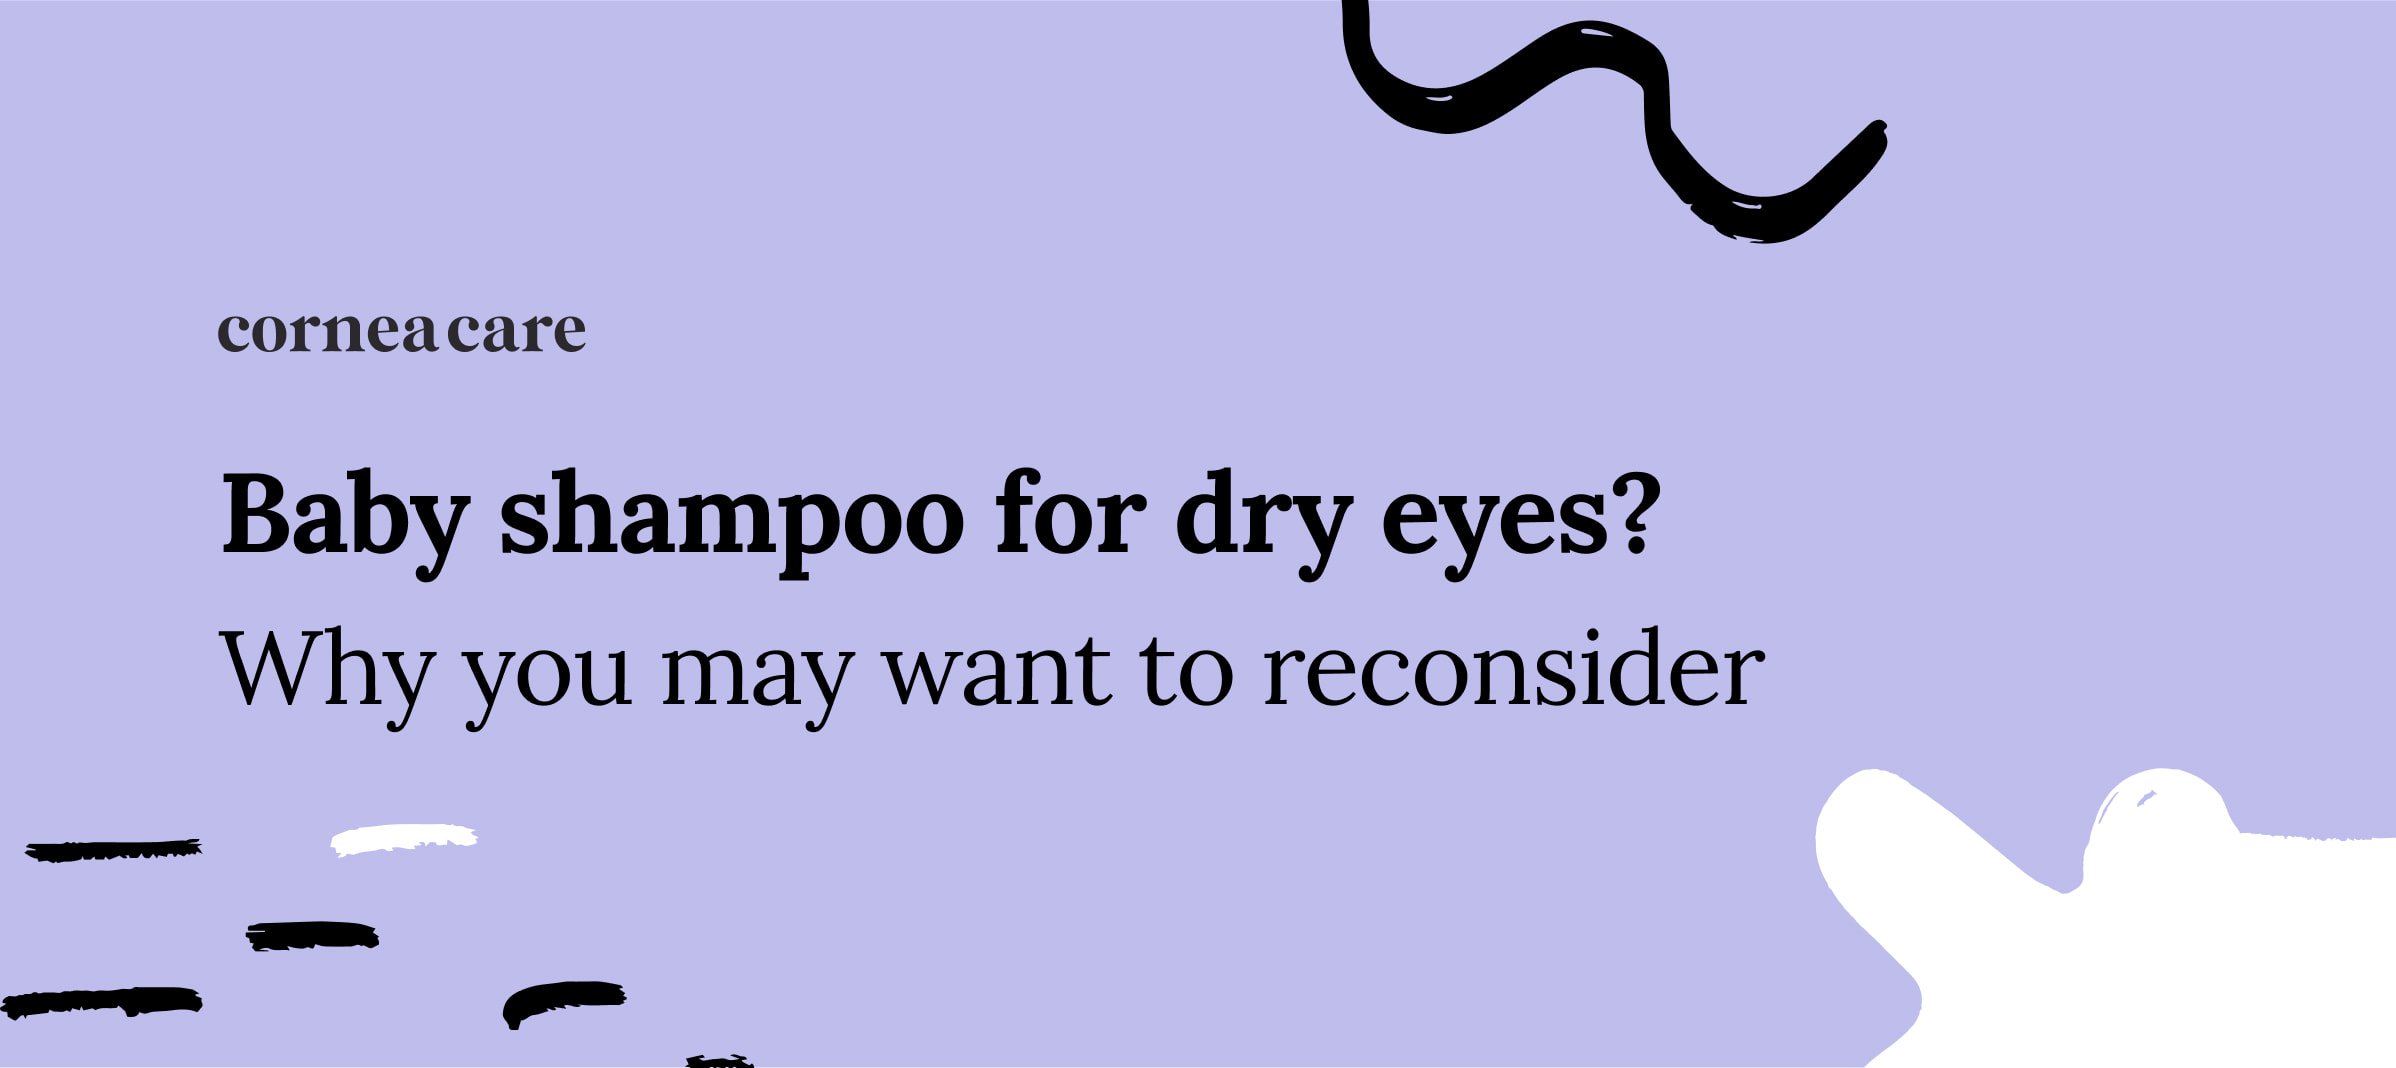 Still using baby shampoo for dry eyes?